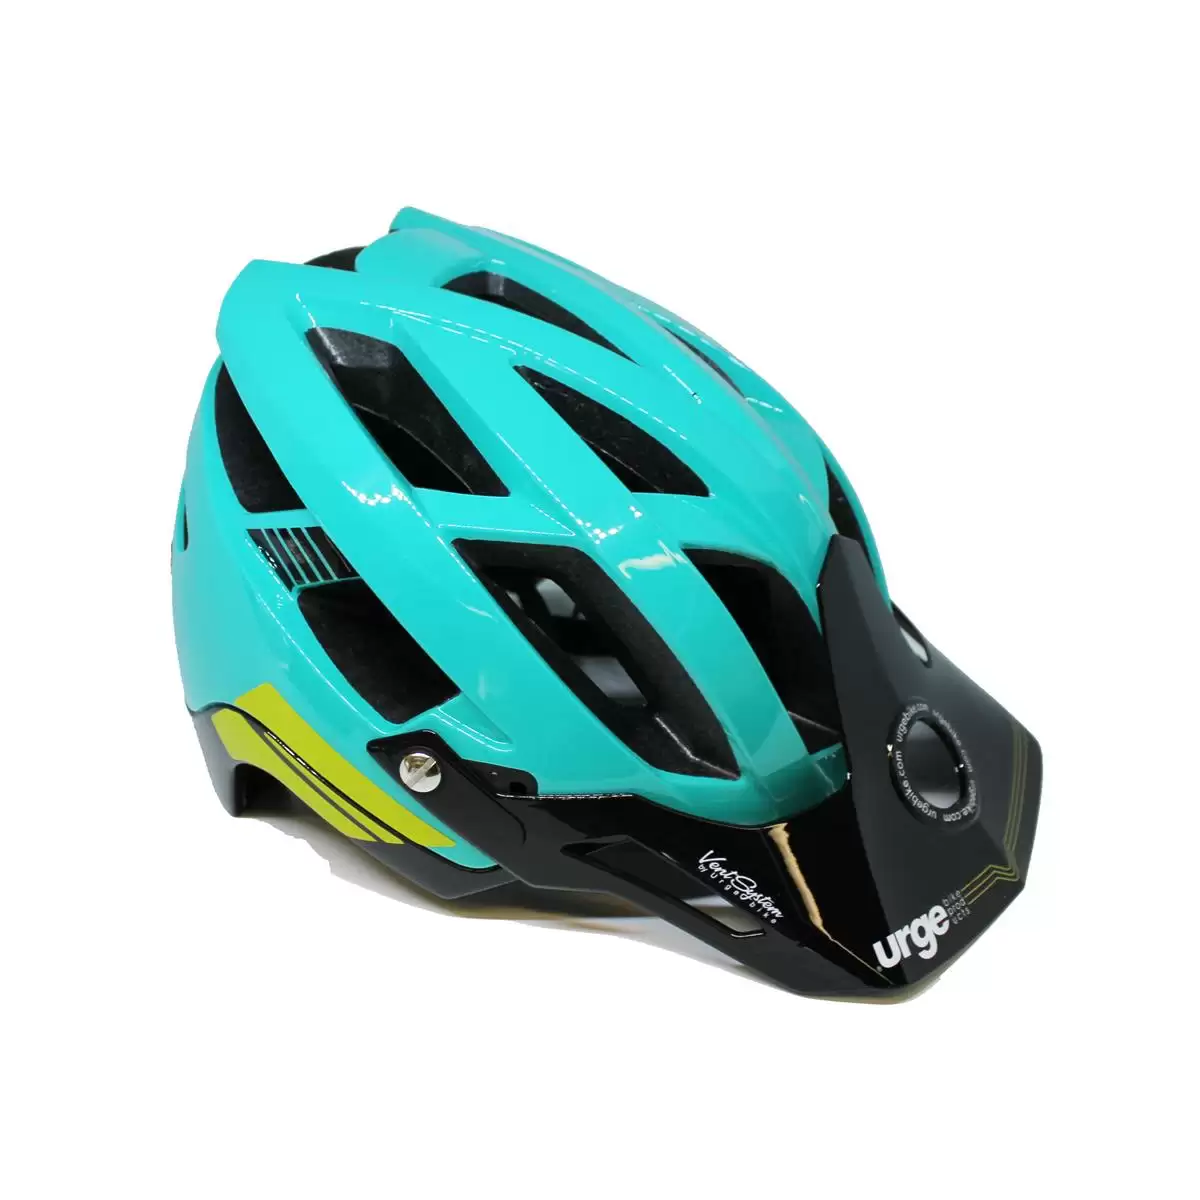 Full face helmet Gringo de la Pampa light blue size S/M (55-58) #5